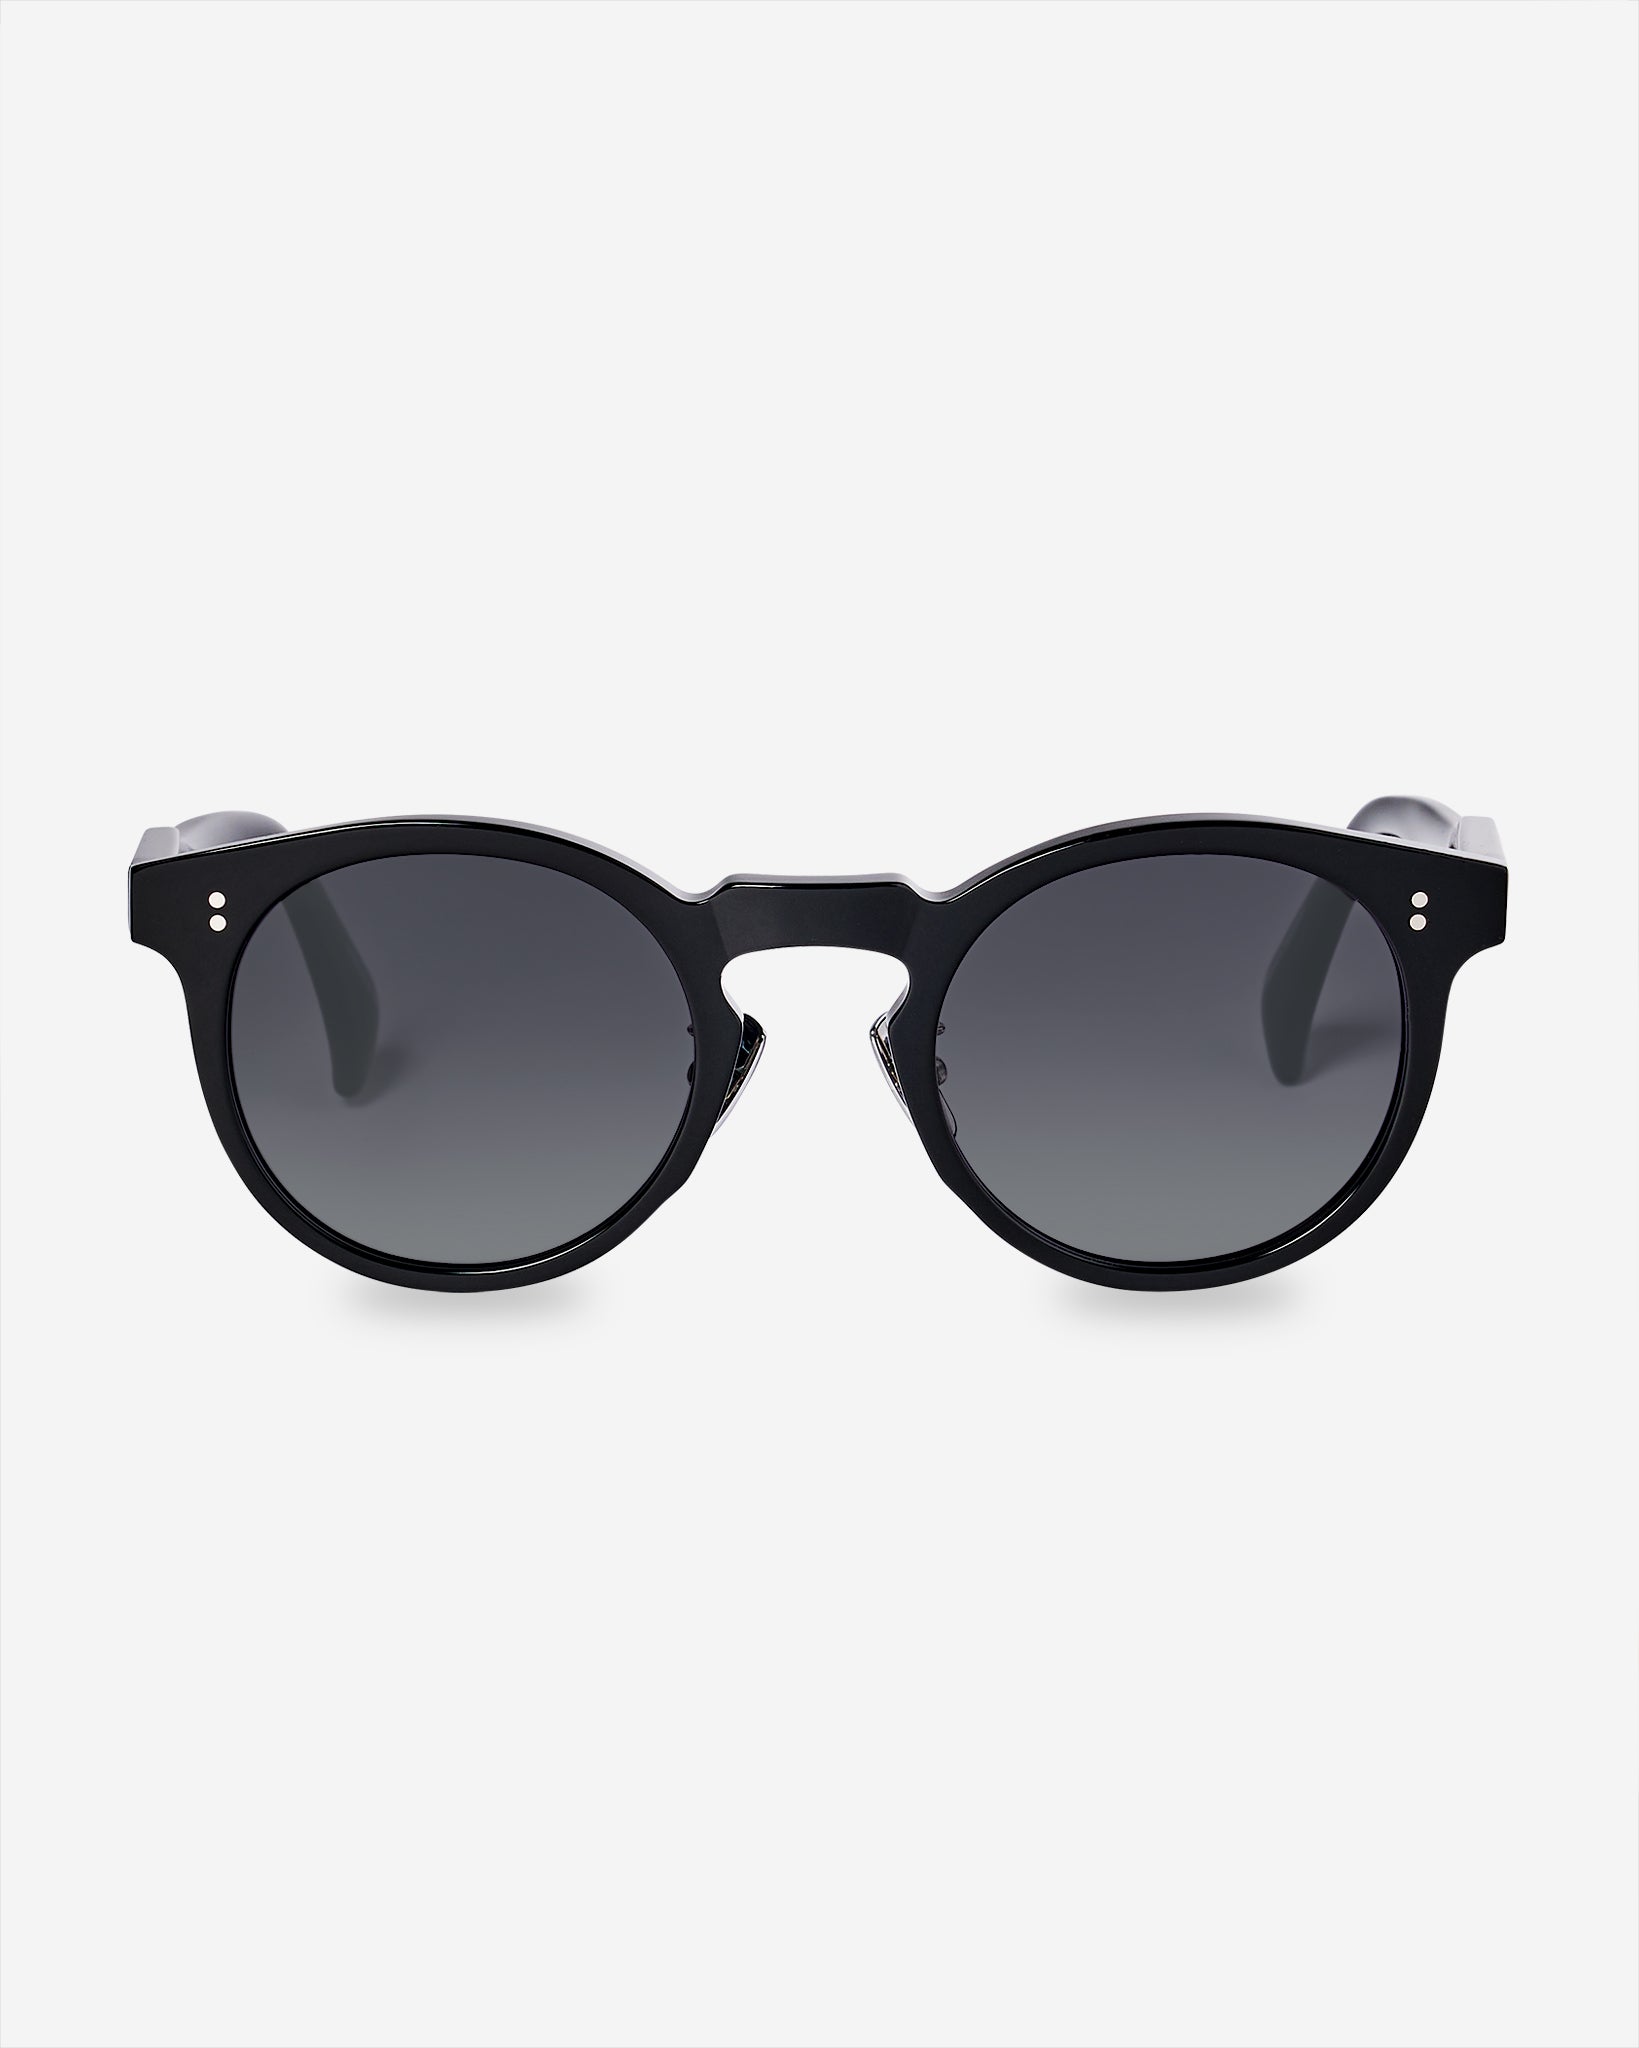 DP_1003 Sunglasses - Black